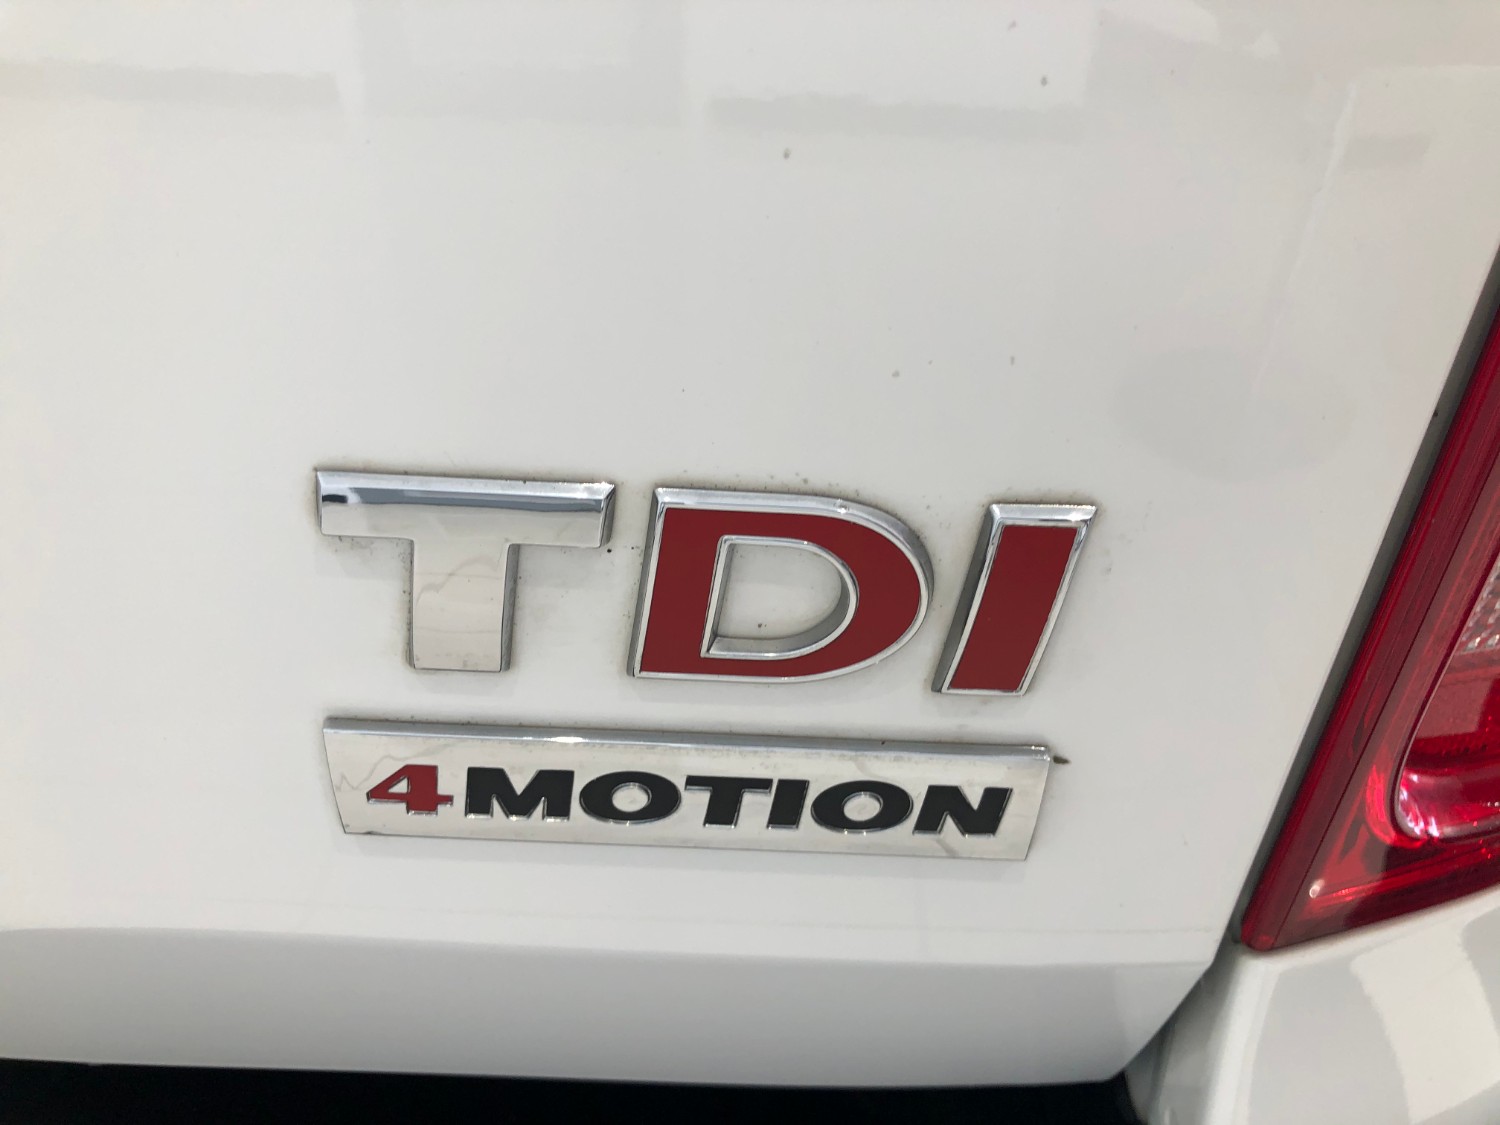 2016 Volkswagen Amarok 2H Tw.Turbo TDI400 Trendline Ute Image 14